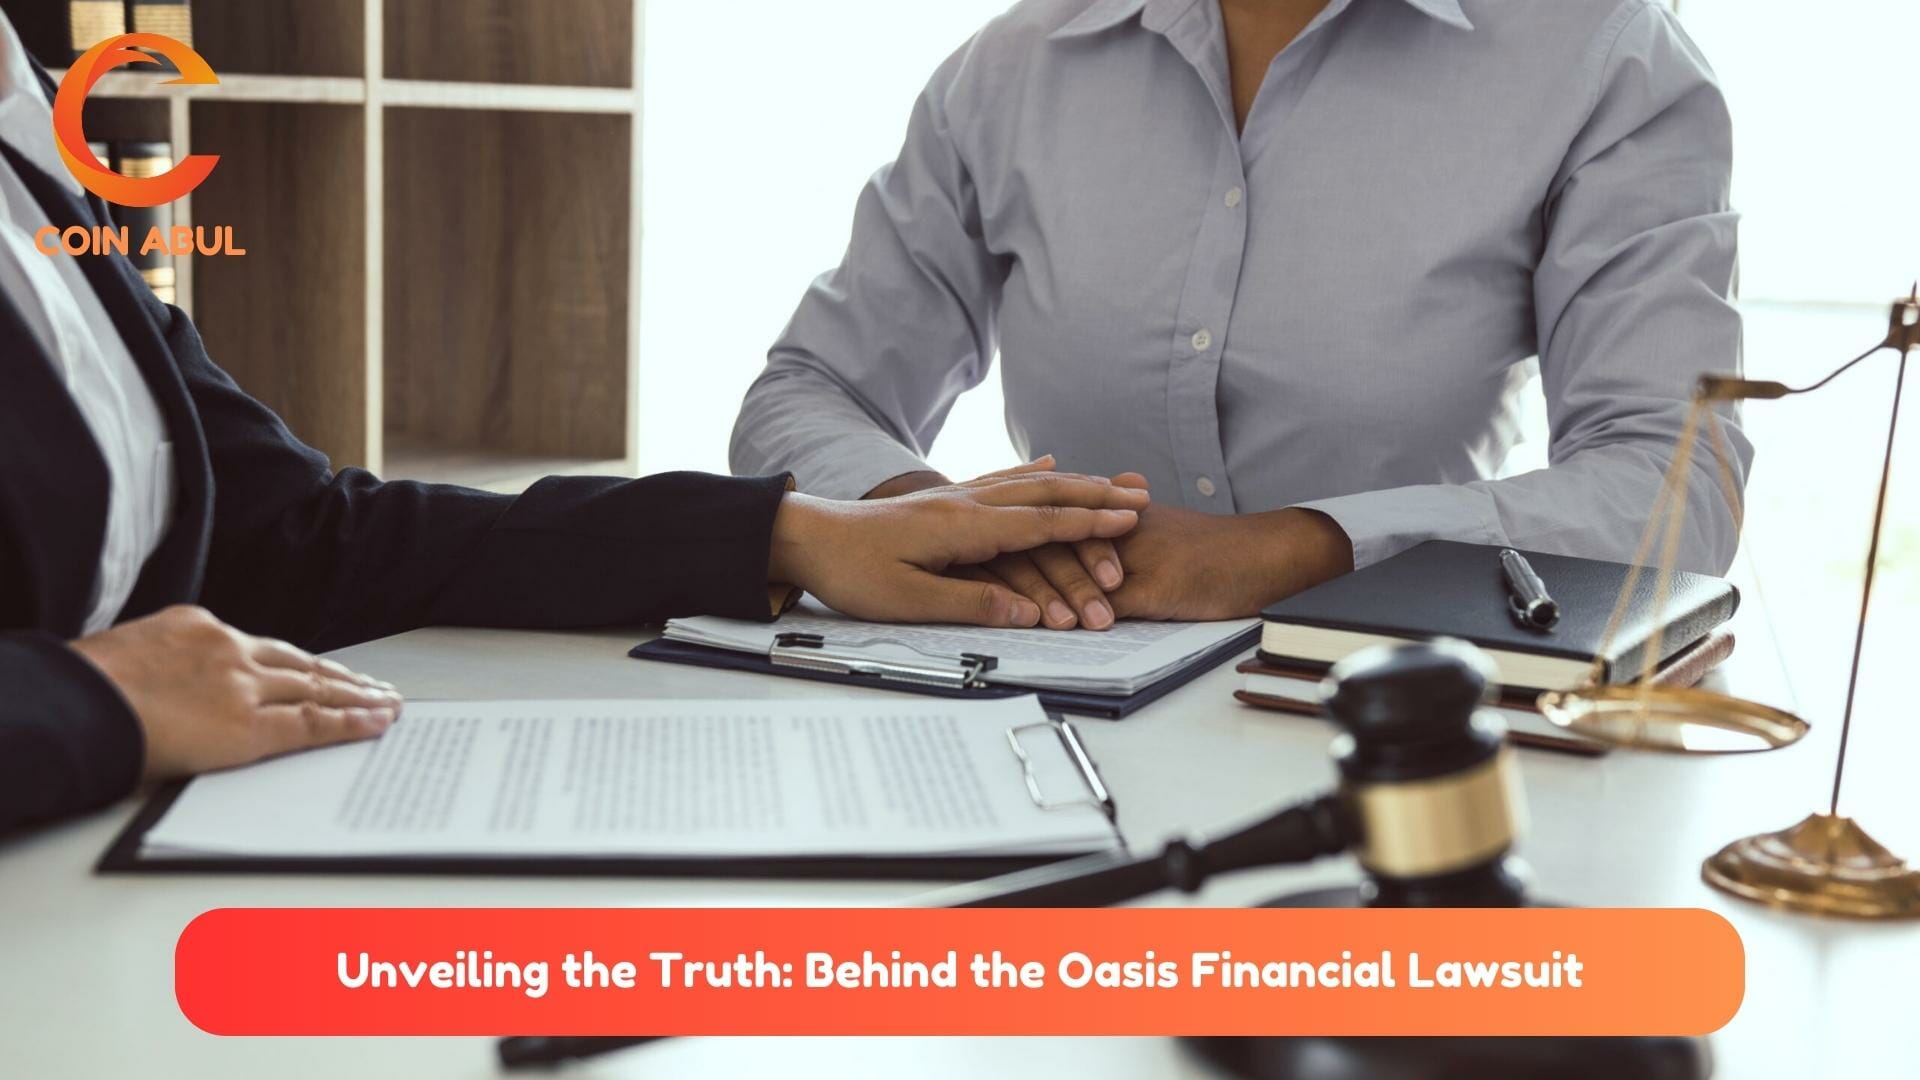 Oasis Financial Lawsuit